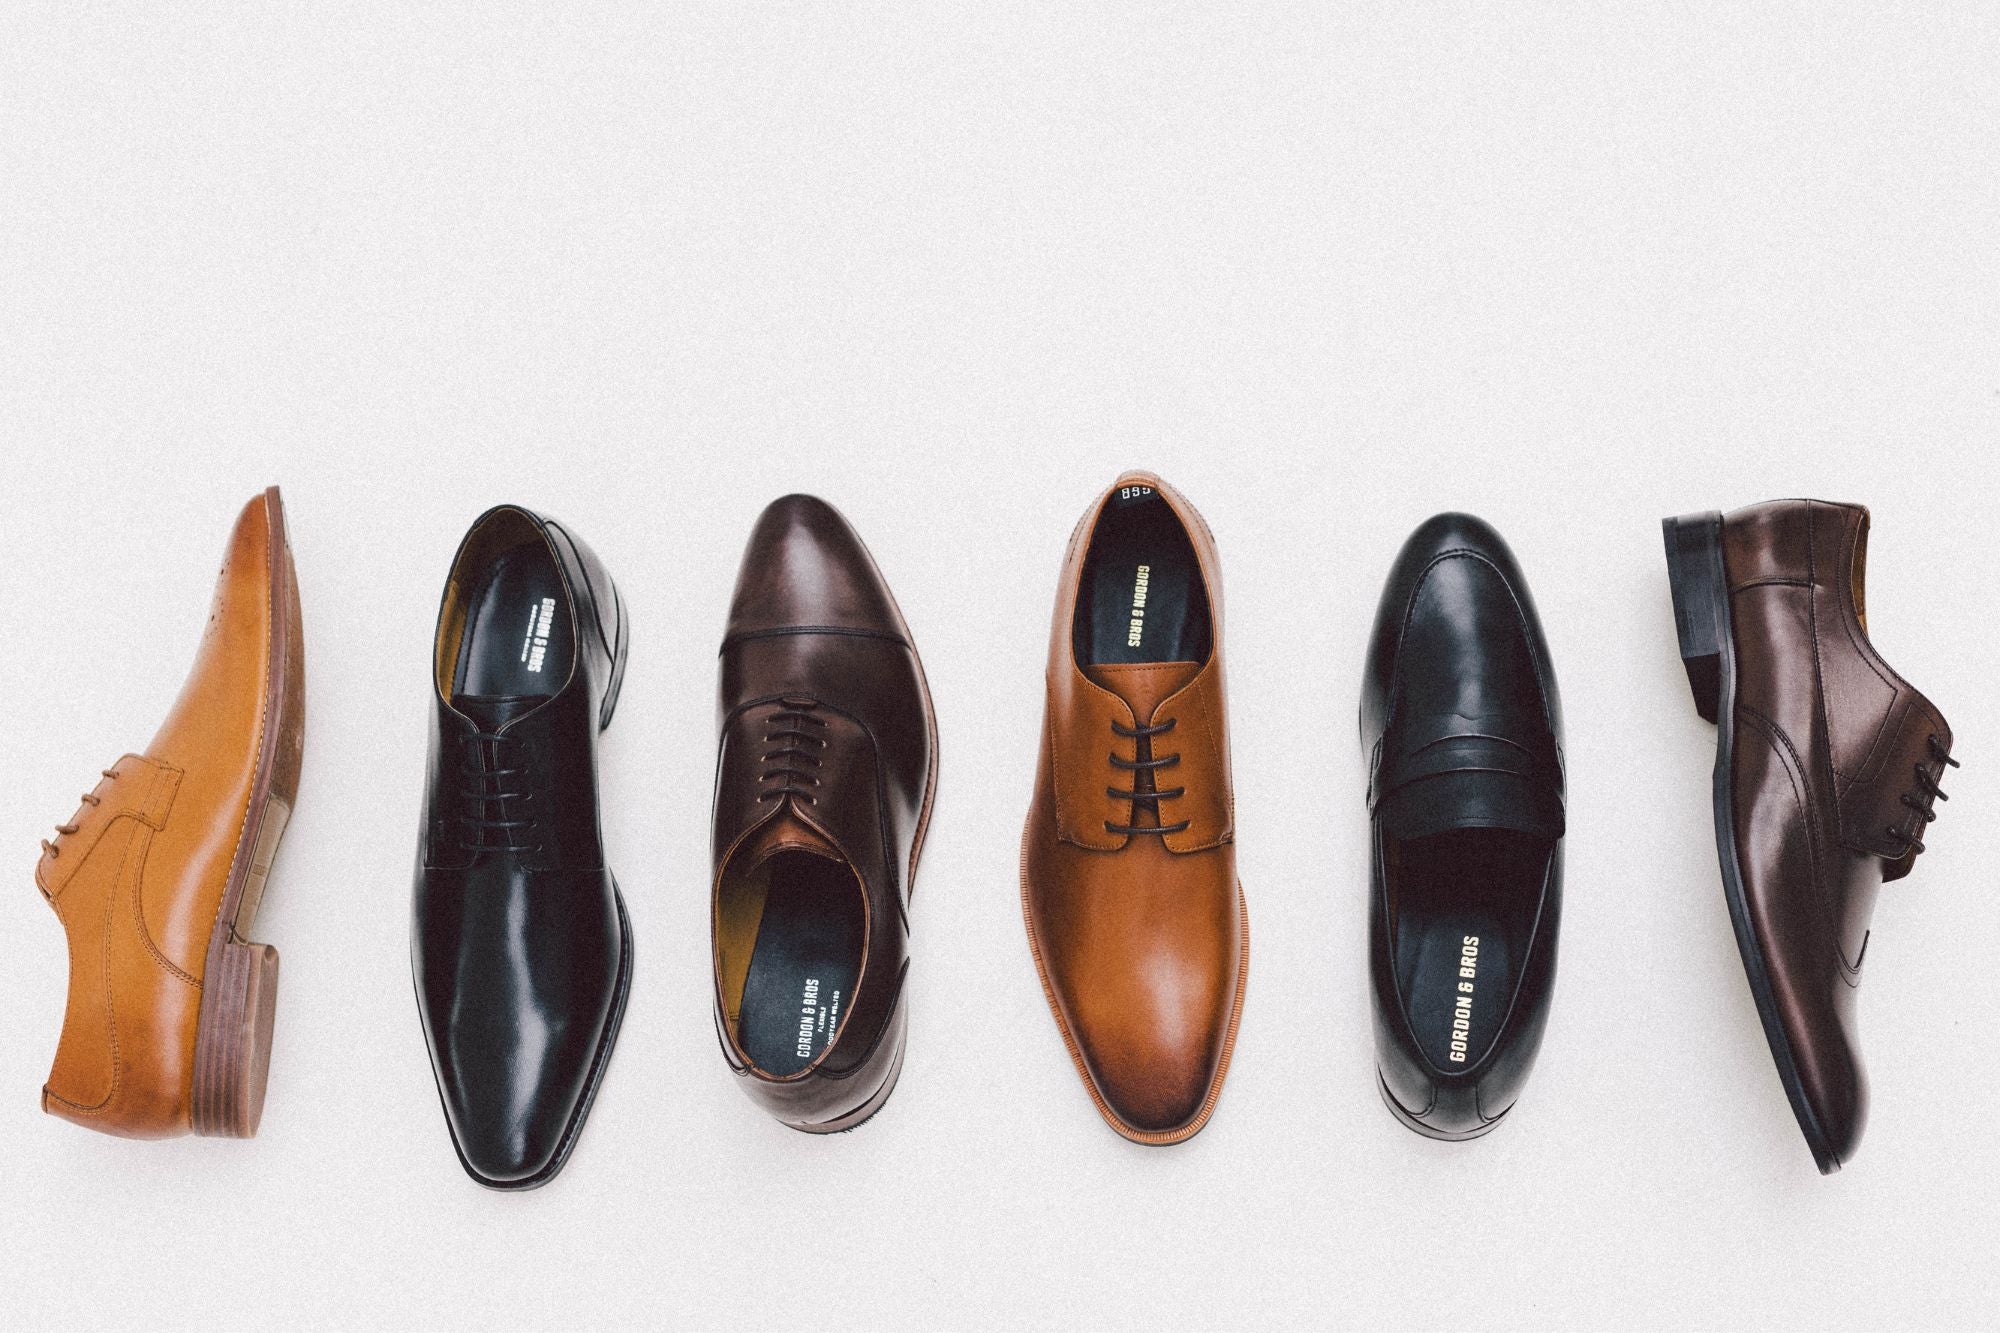 GORDON & BROS: Men's shoes & accessories for the modern gentleman